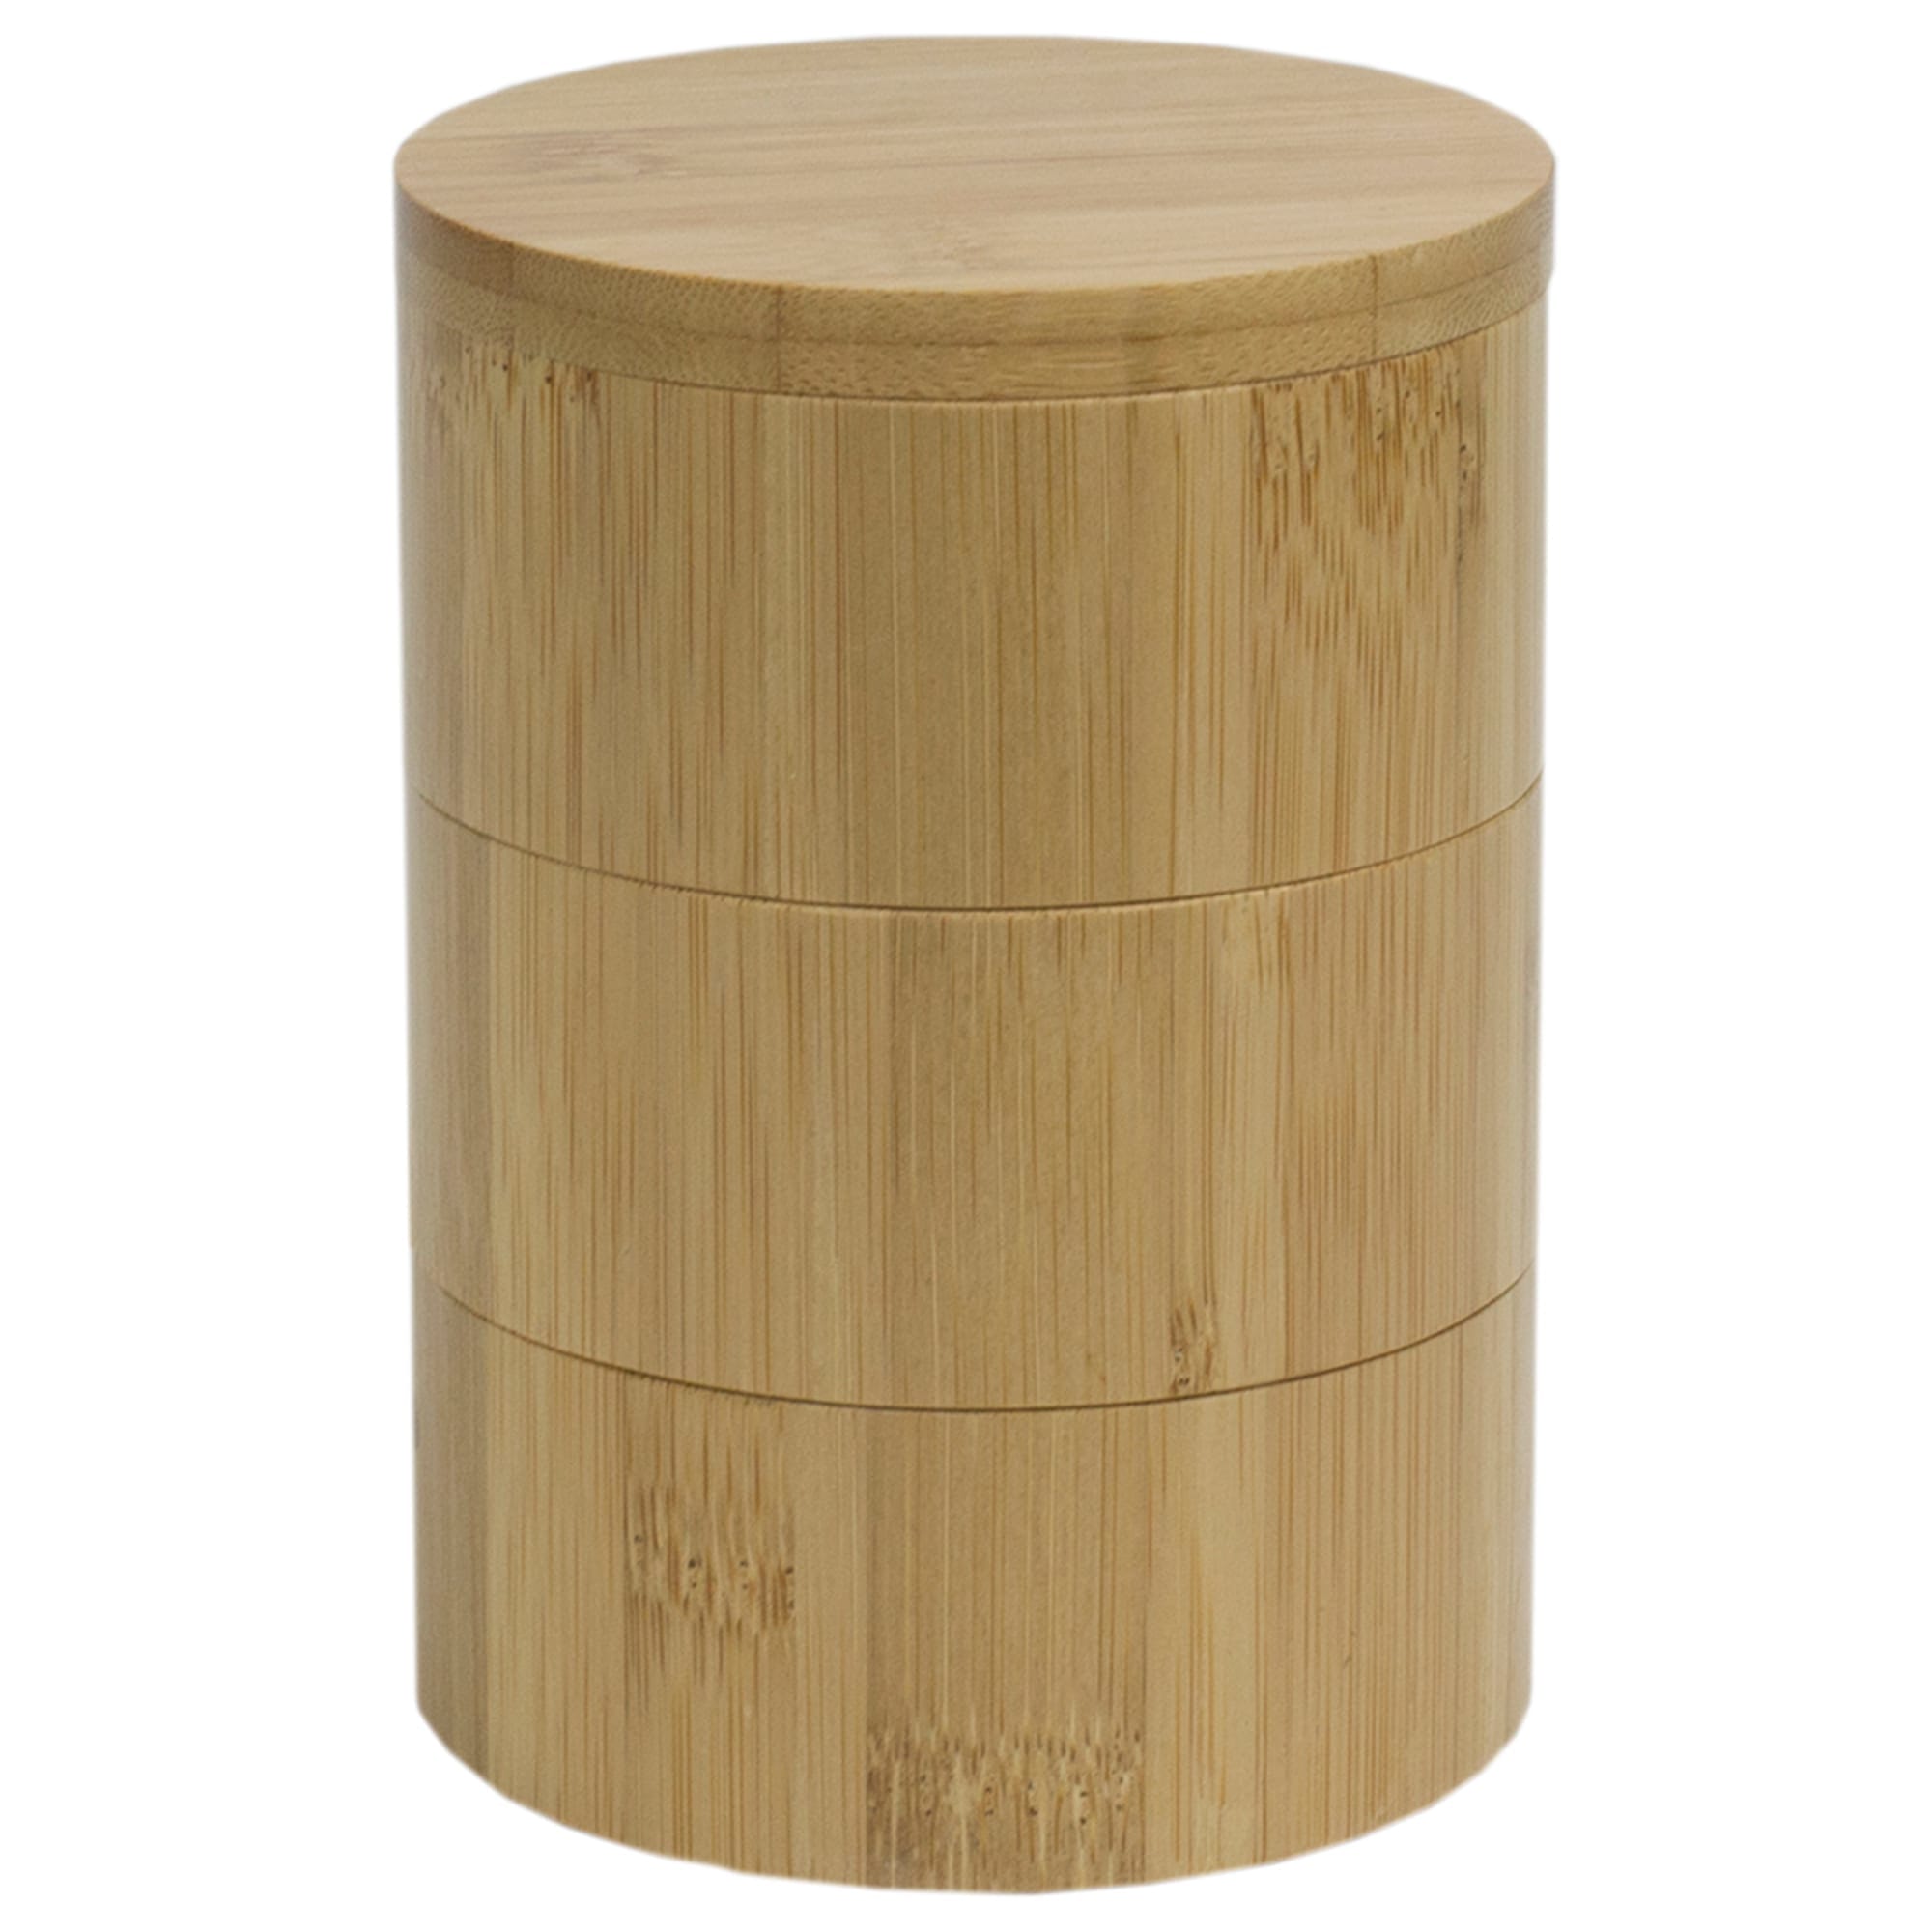 Home Basics 3 Tier Bamboo Salt Box $10 EACH, CASE PACK OF 12